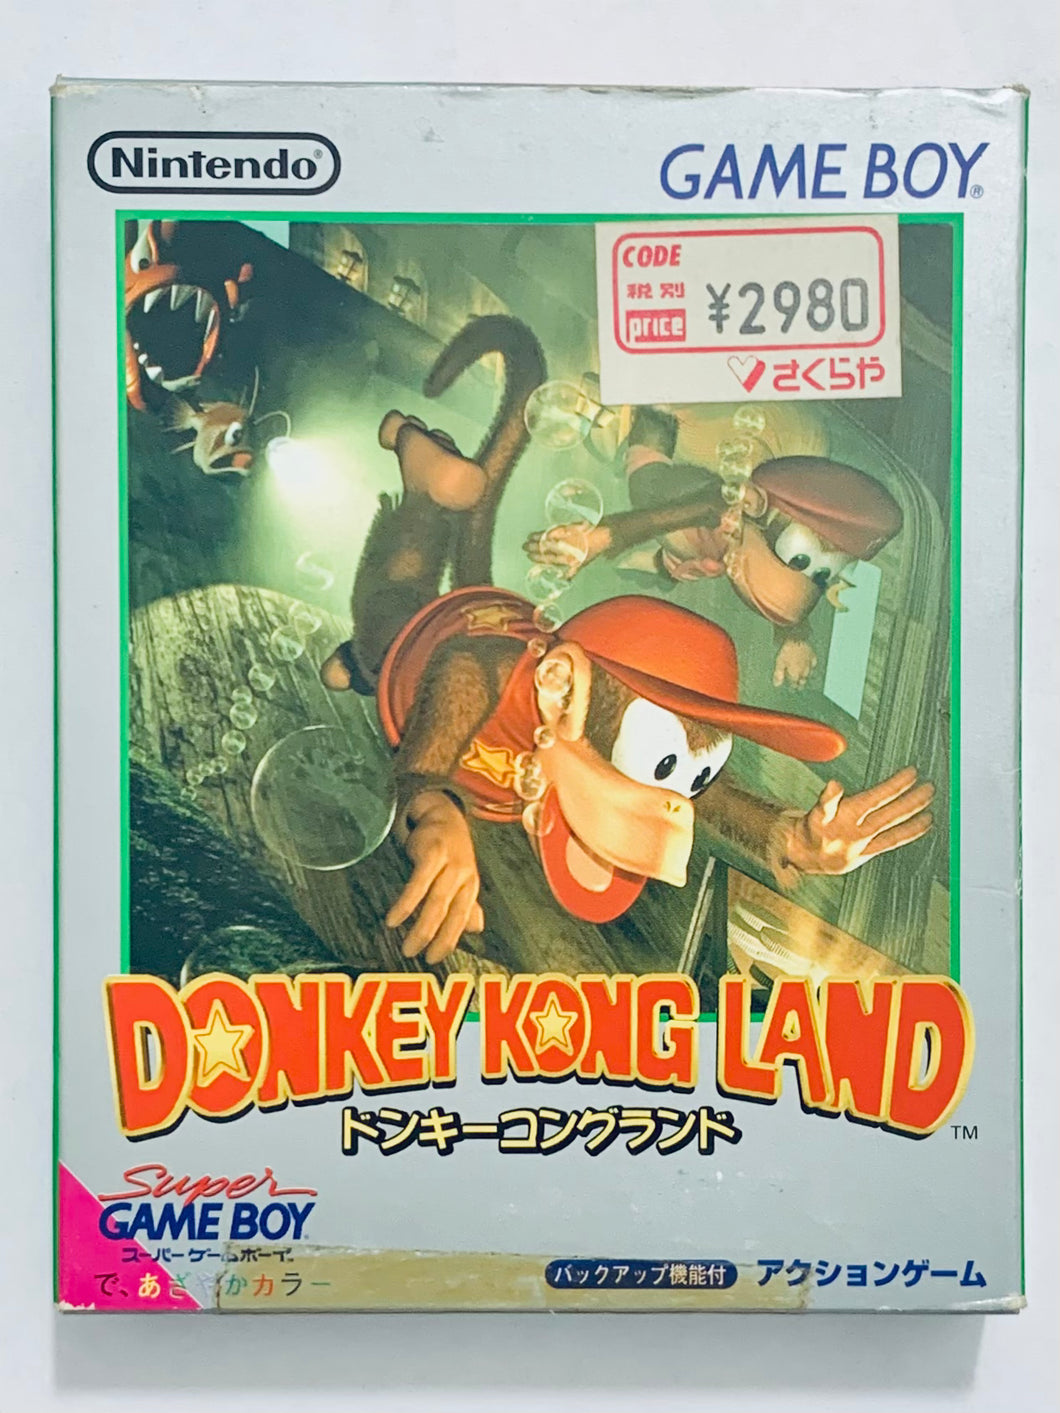 Donkey Kong Land - GameBoy - Game Boy - Pocket - GBC - GBA - JP - CIB (DMG-ADDJ-JPN)